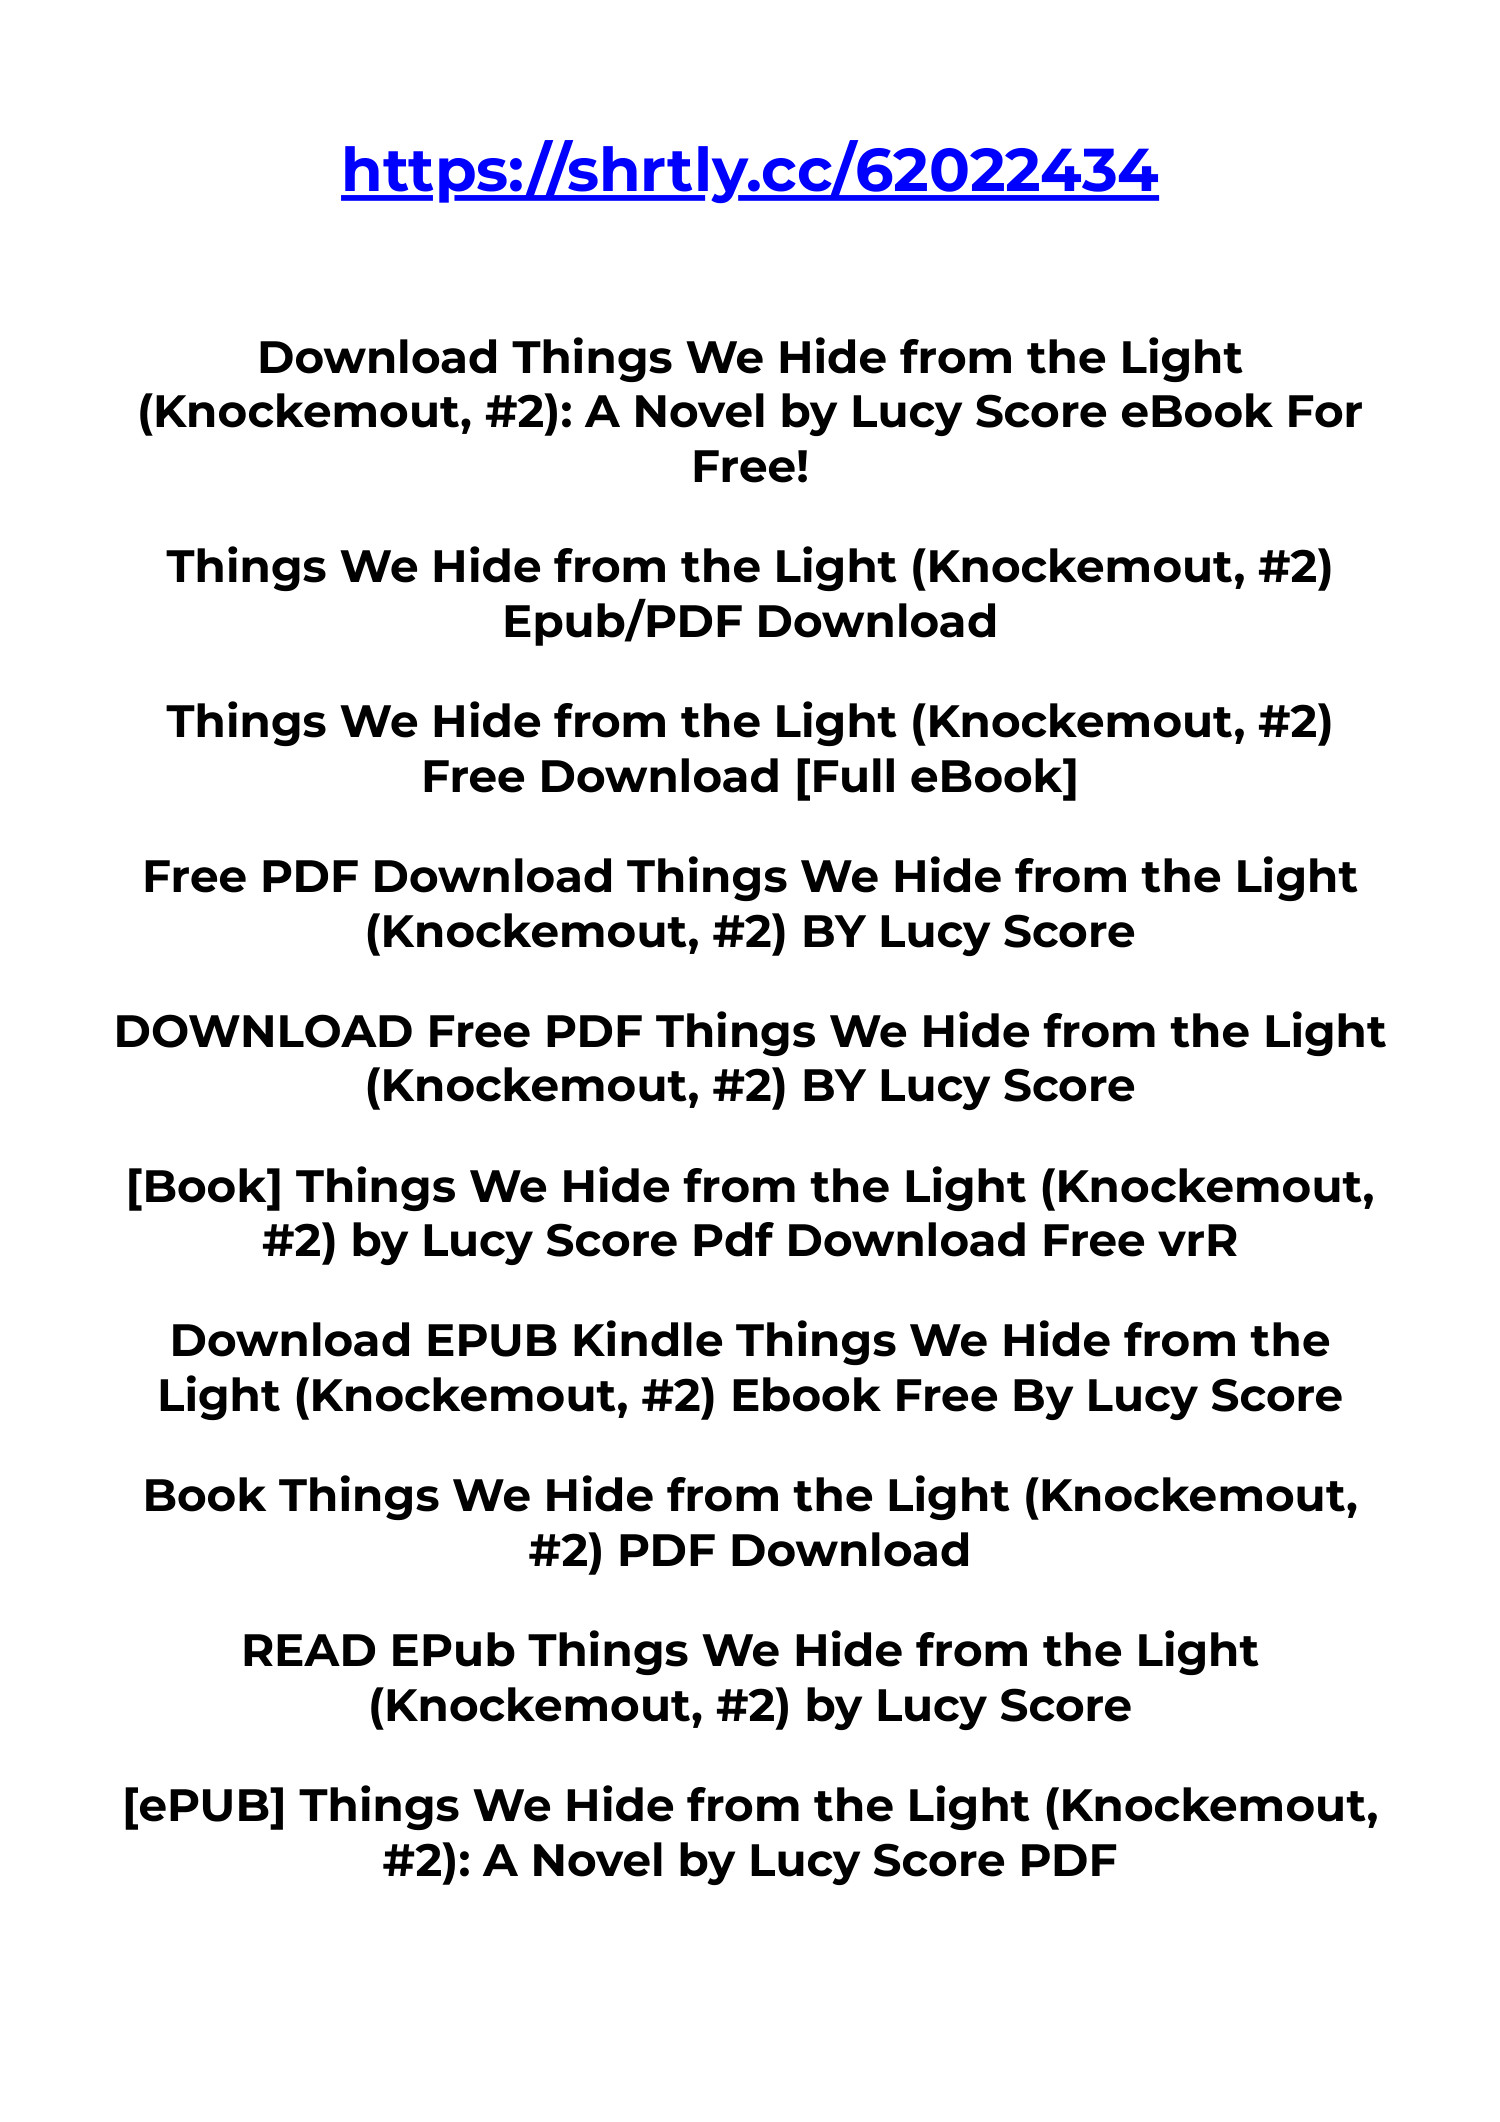 Libro [PDF EPUB] Cosas que ocultamos de la luz (Knockemout n 2) de Lucy  Score {.epub}.pdf